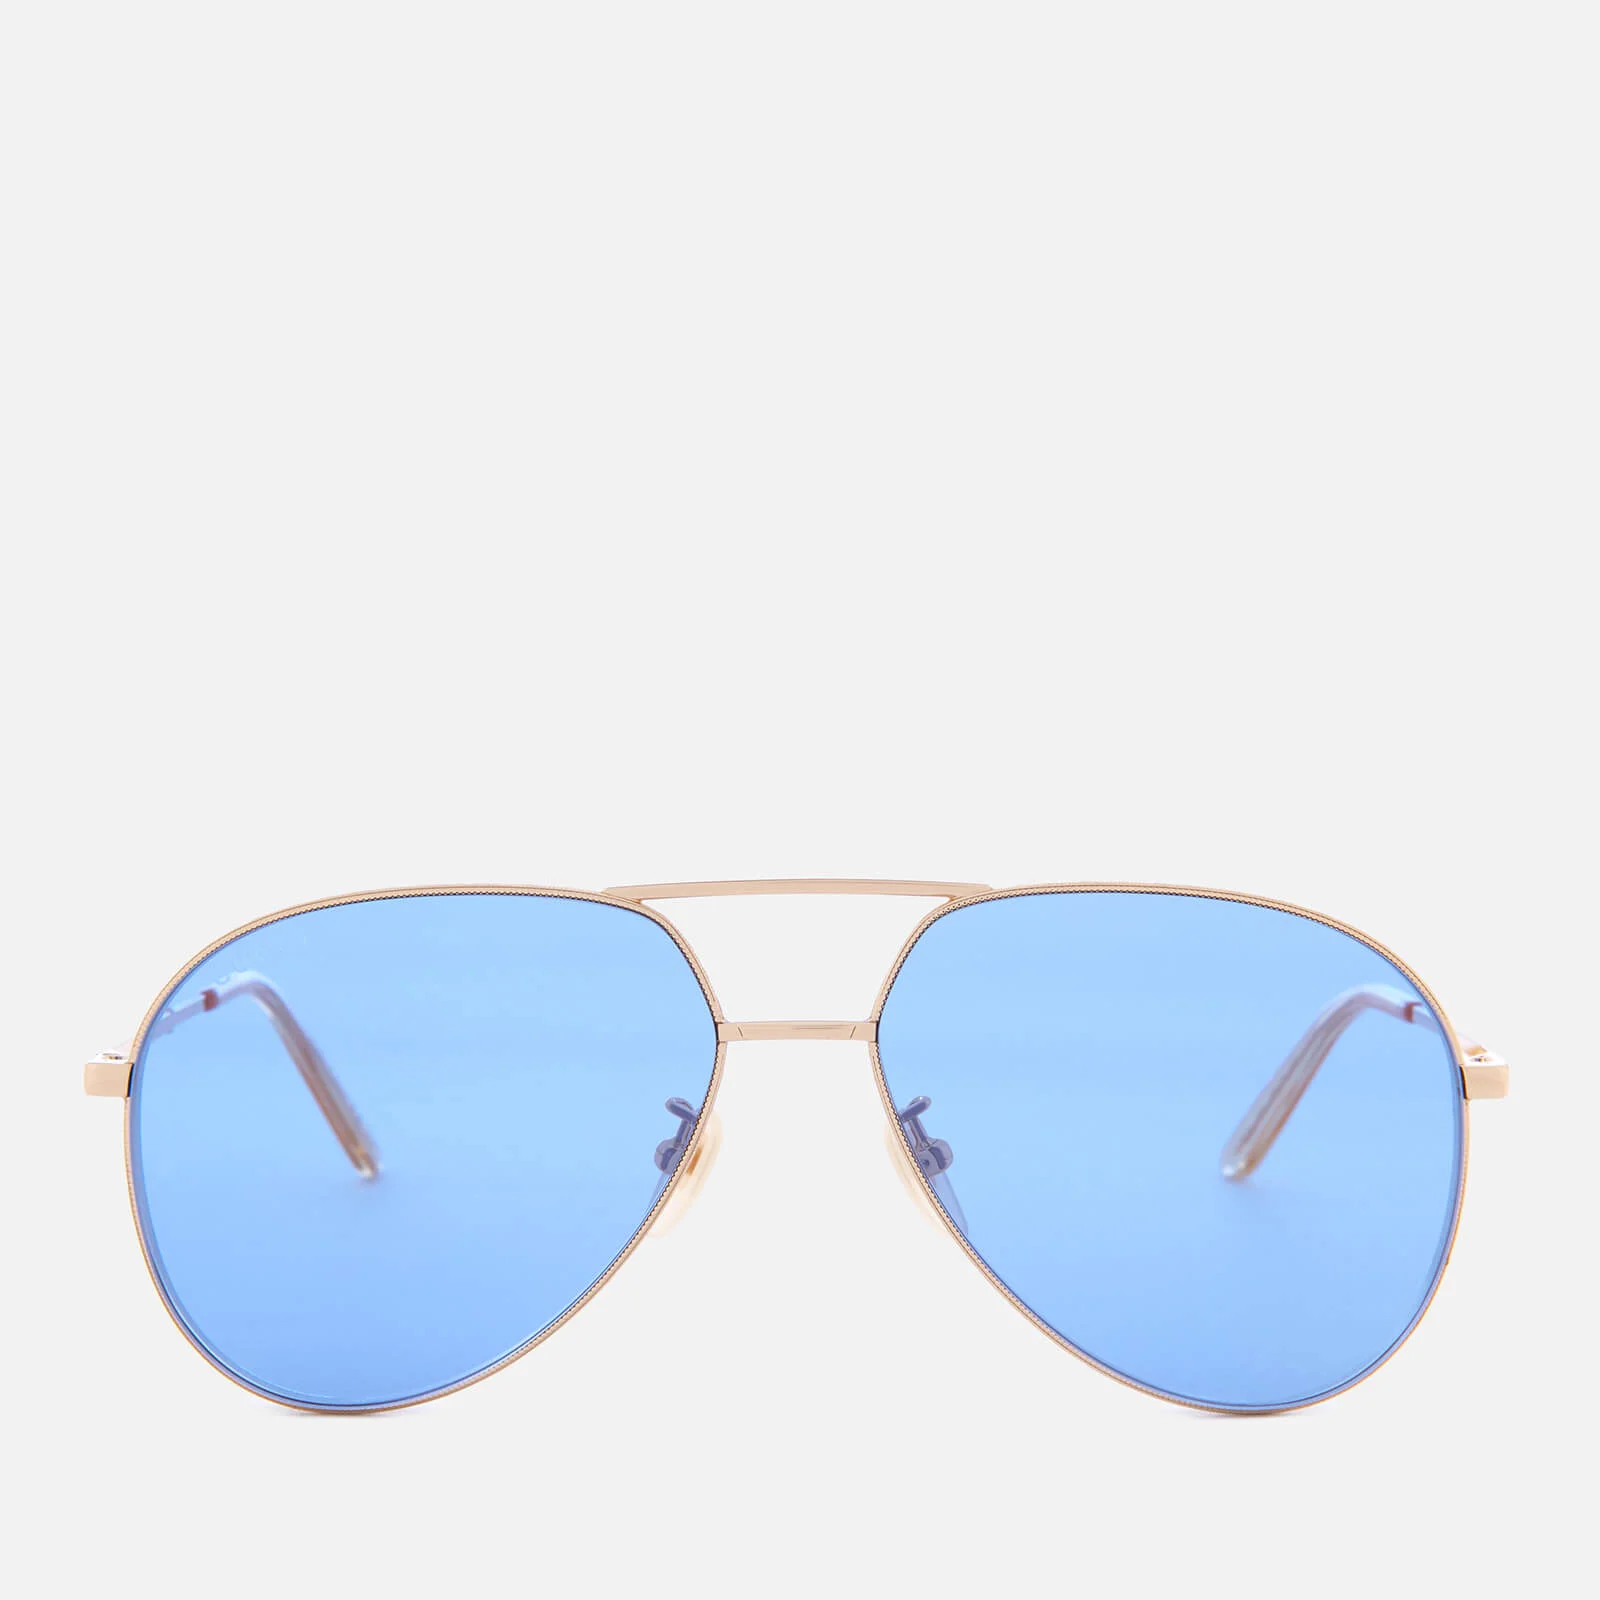 Gucci Metal Frame Sunglasses - Gold/Blue Image 1